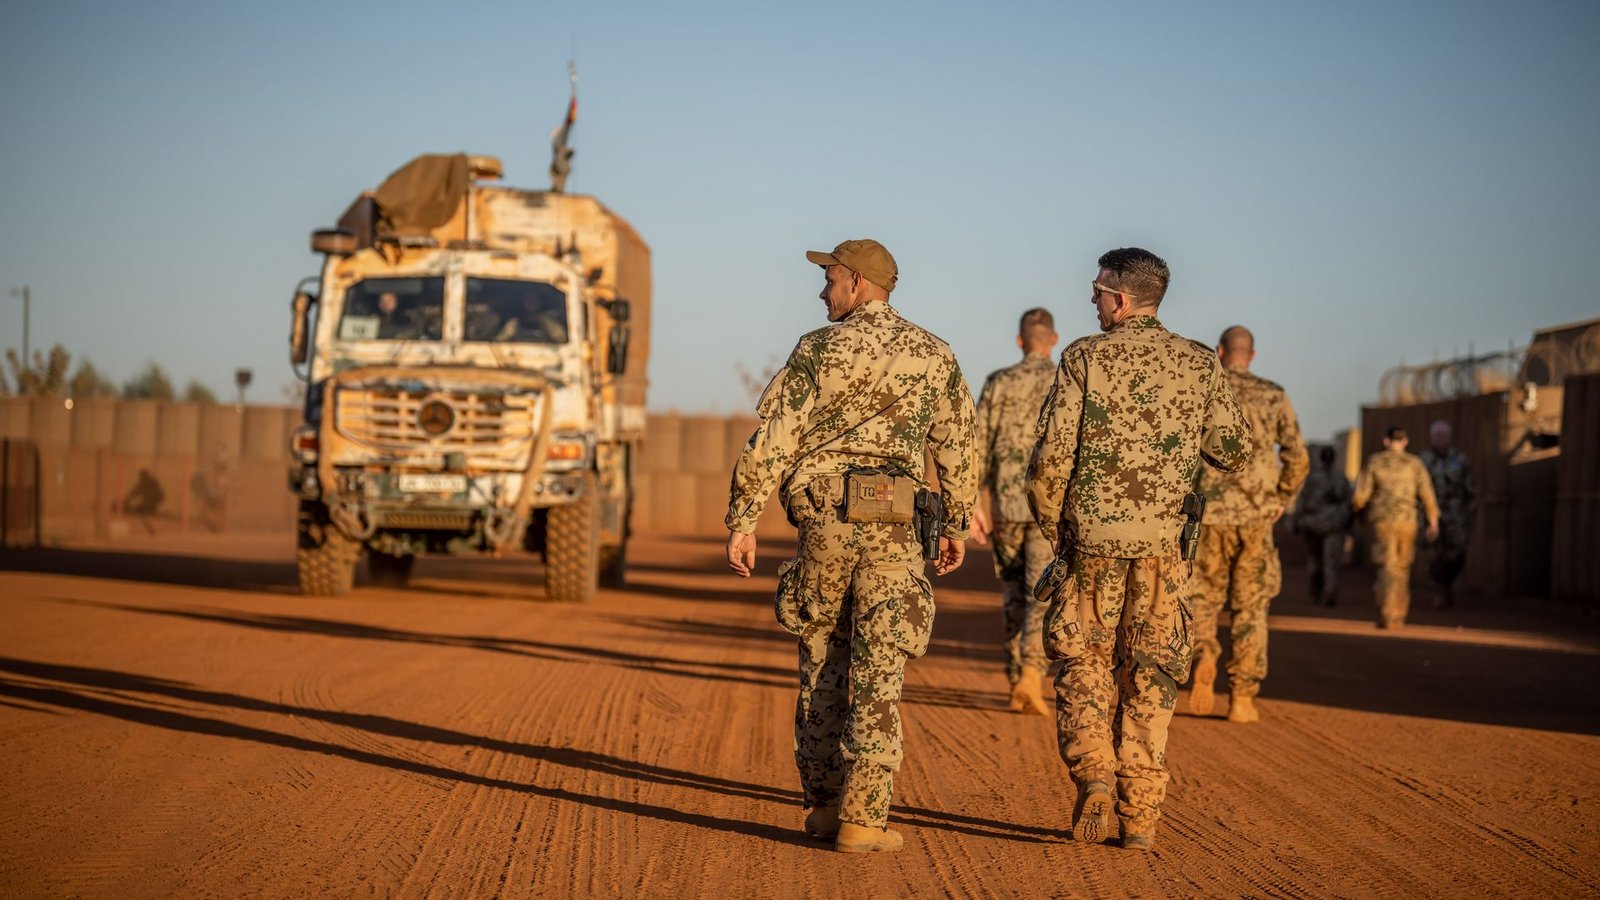 Soldaten der Bundeswehr in Mali (Archivbild).Foto: Michael Kappeler/dpa